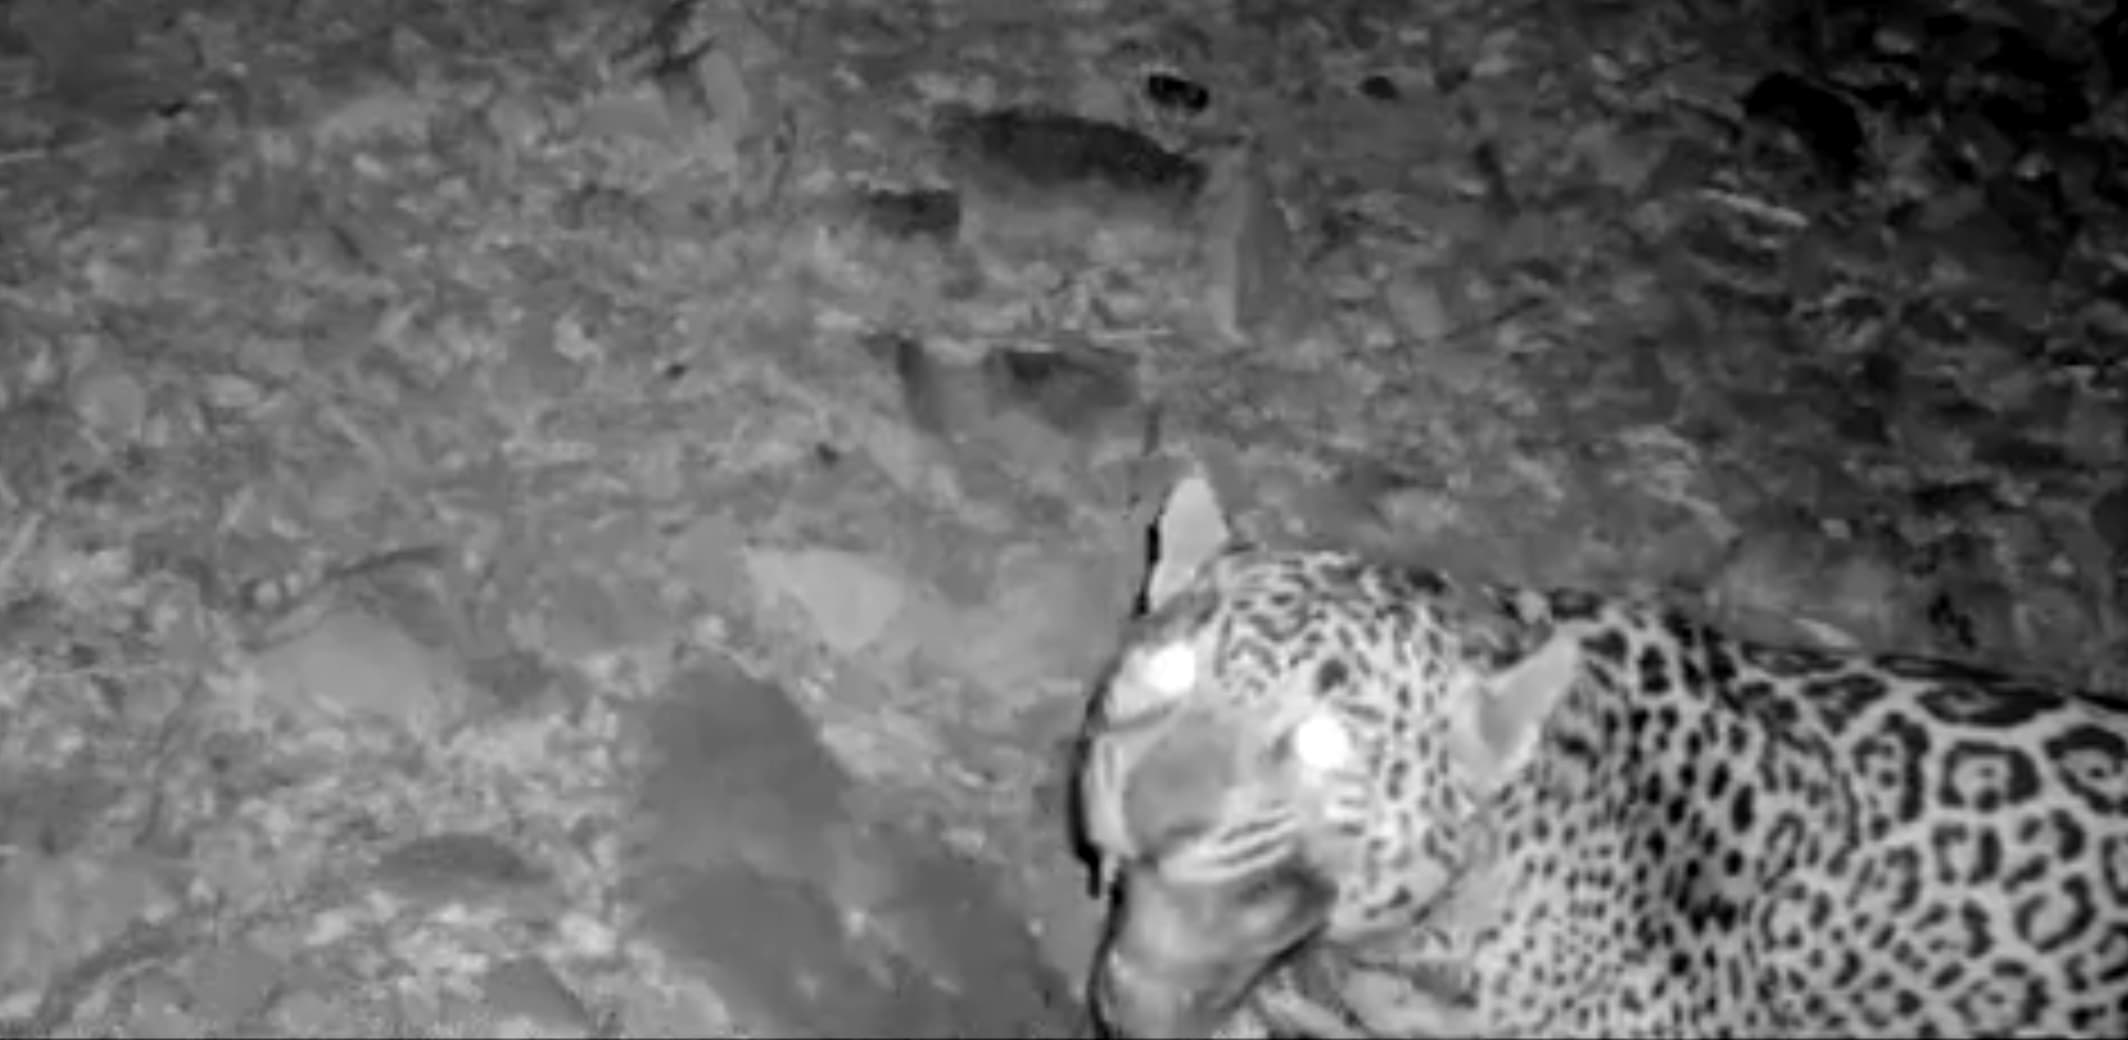 Watch: Unknown jaguar appears on Arizona trail camera